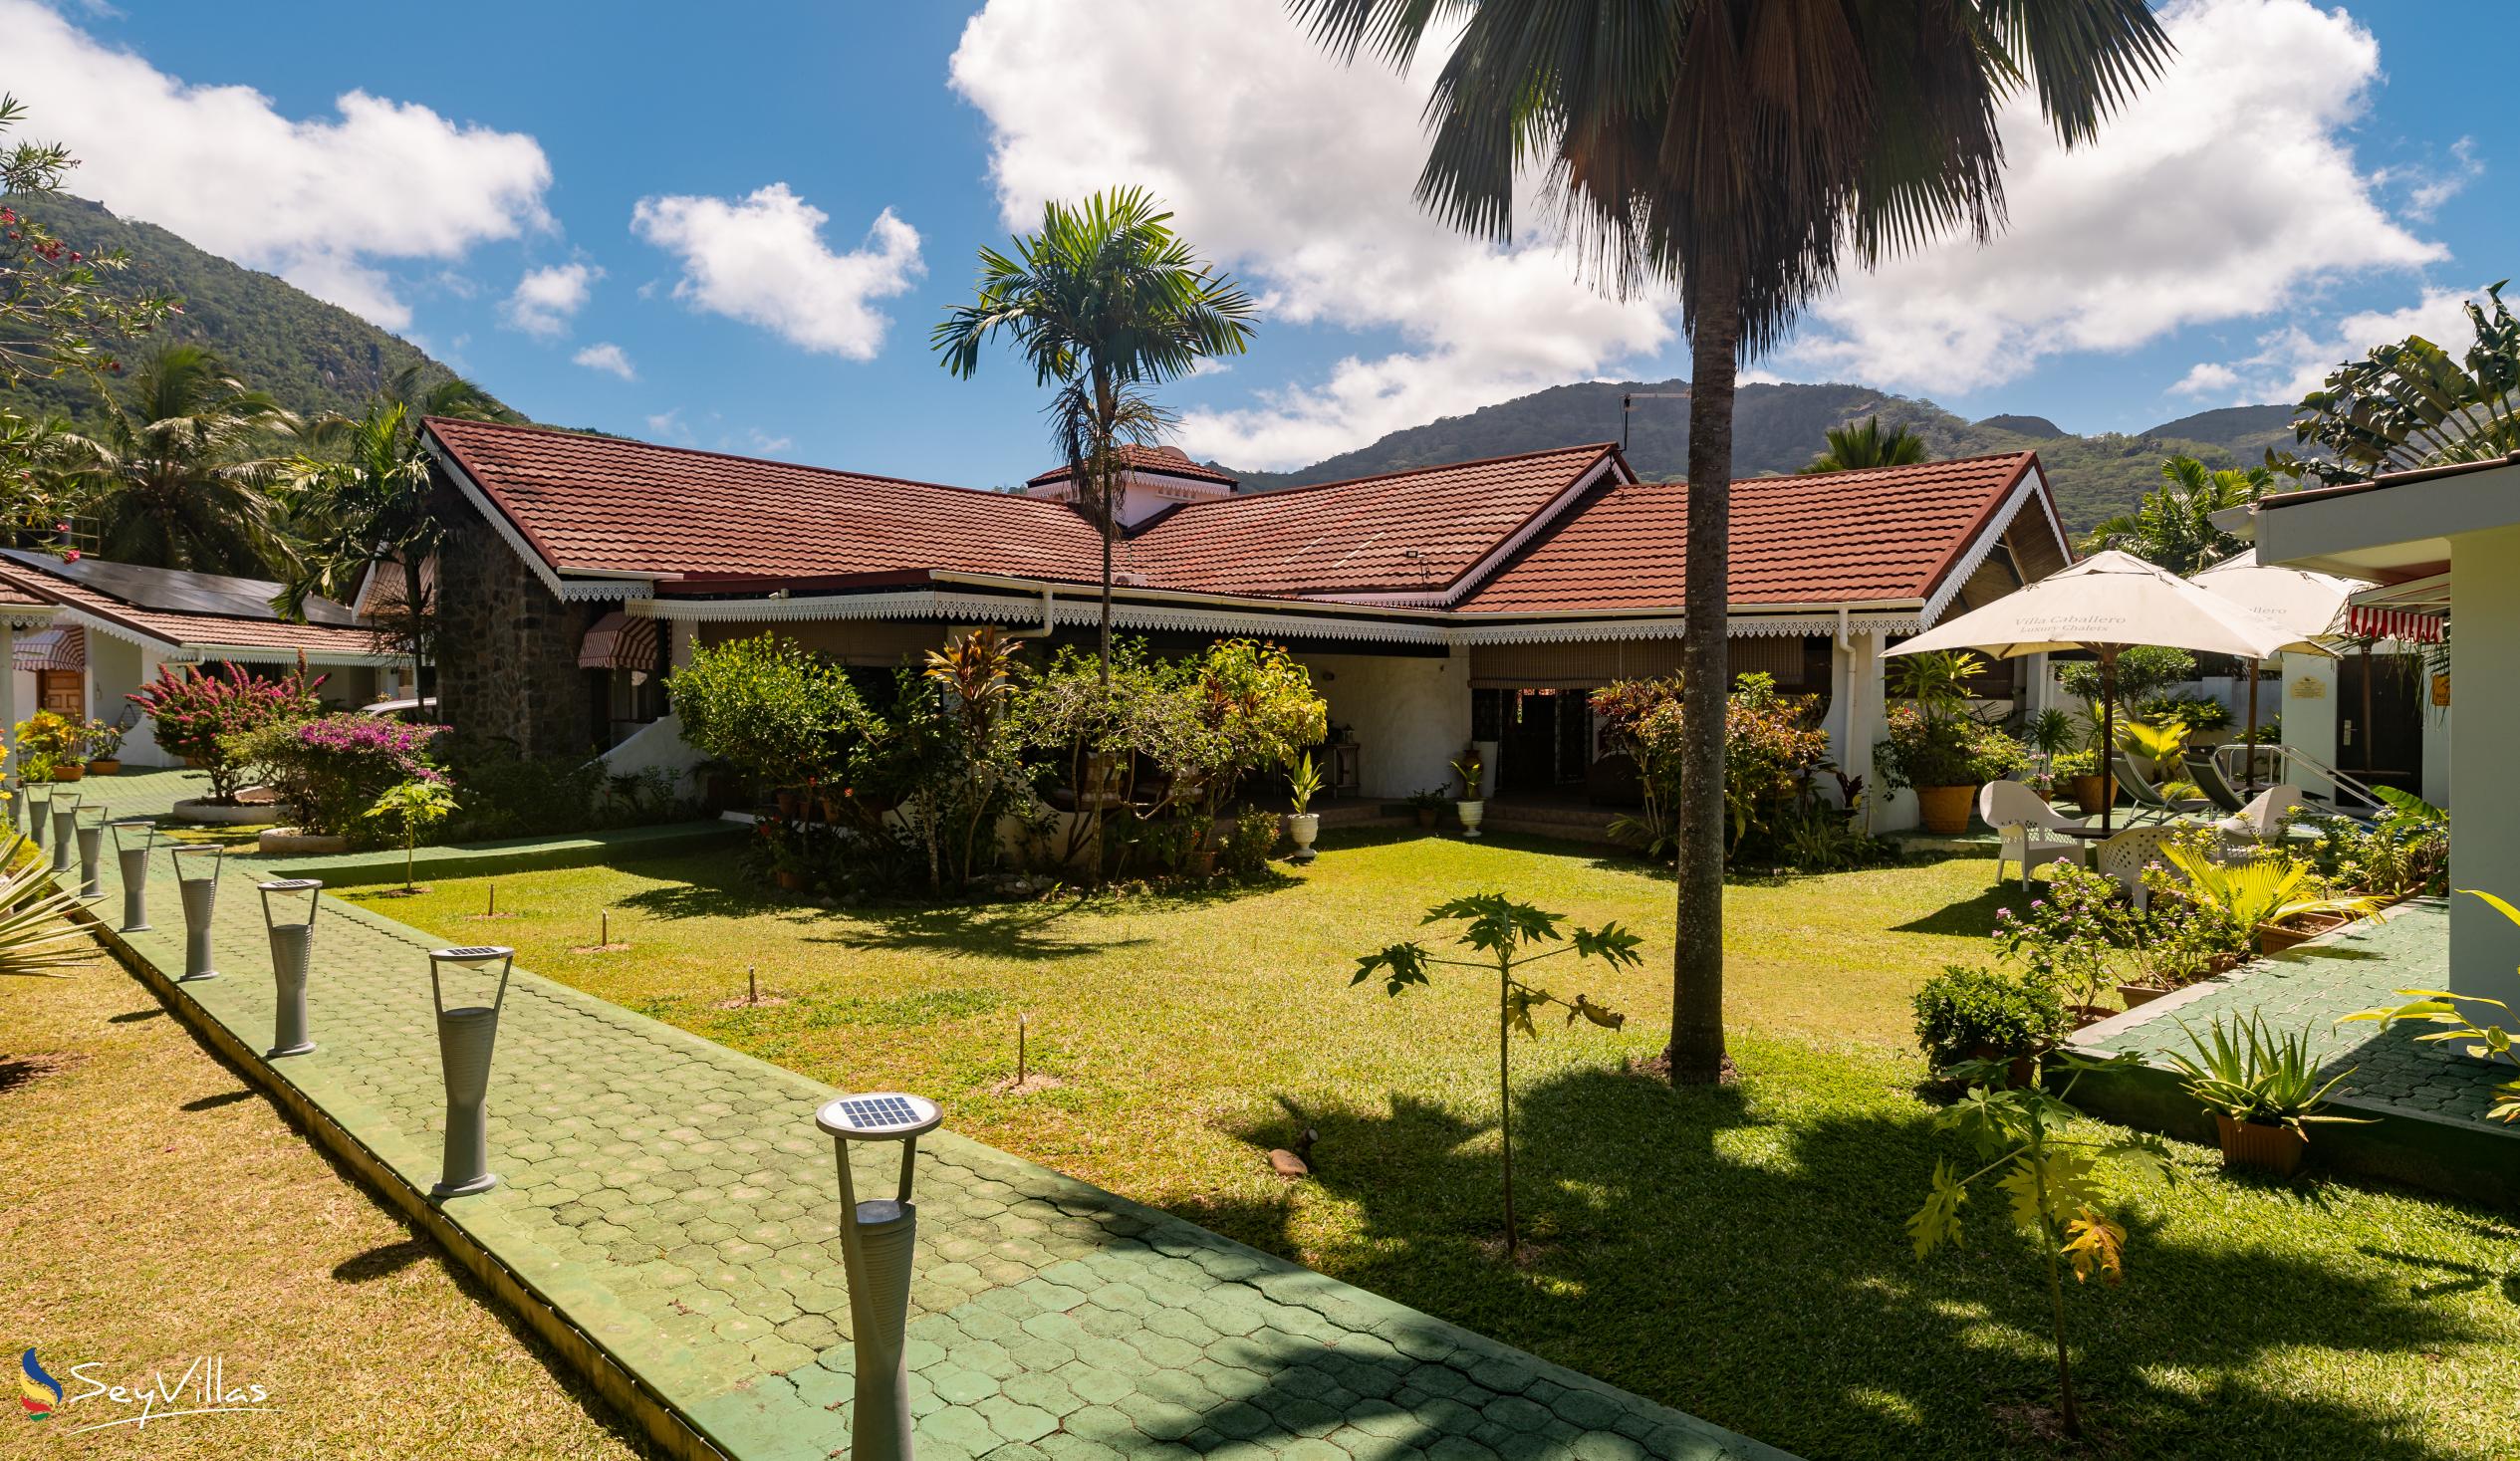 Foto 15: Villa Caballero - Aussenbereich - Mahé (Seychellen)